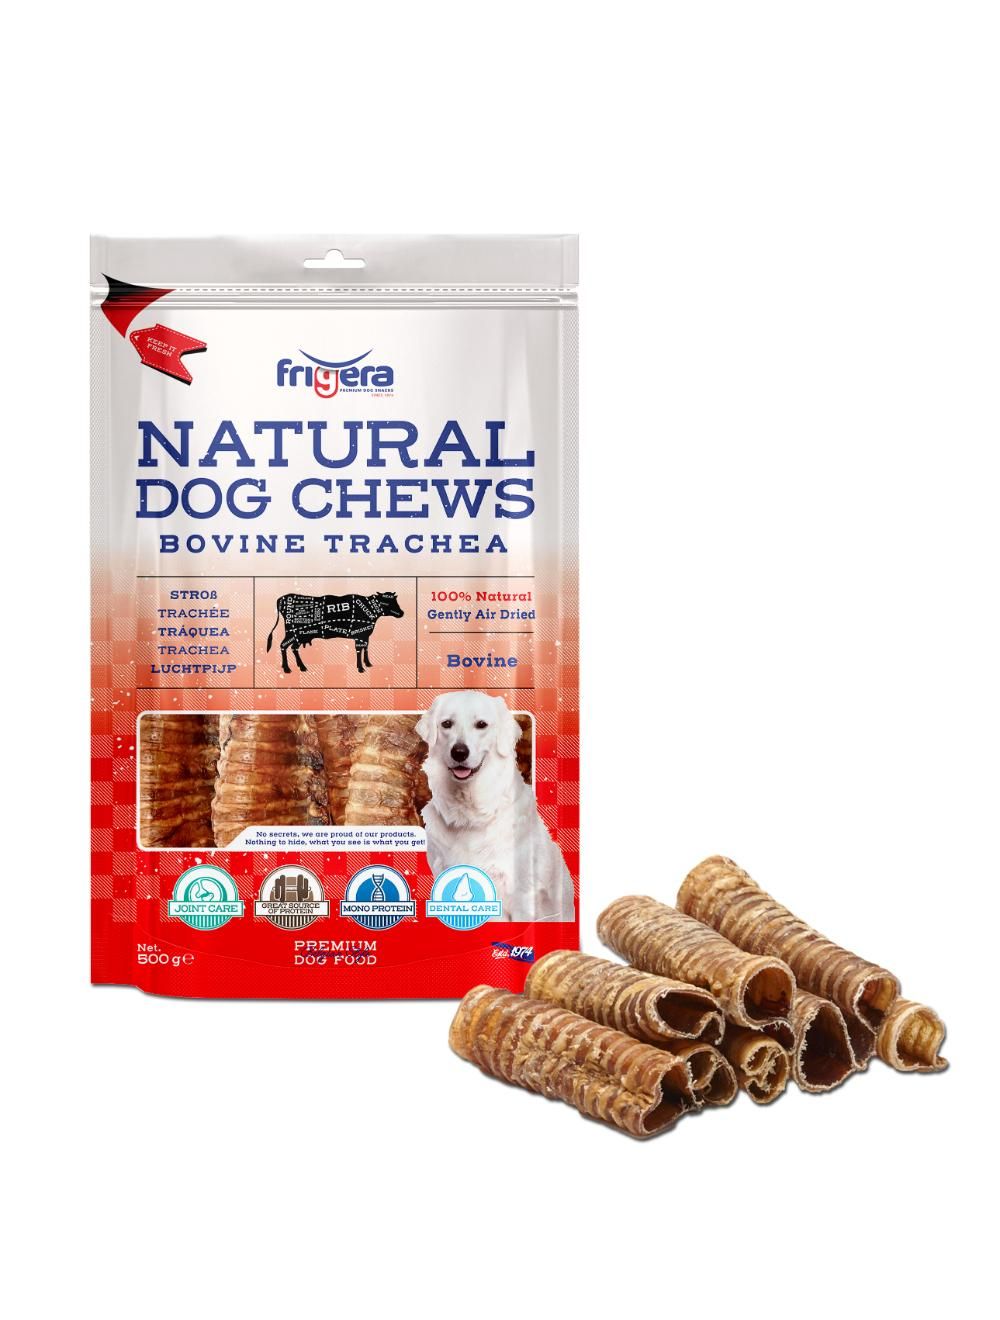 Frigera - Natural Dog Chews Bovine trachea 500gr - (402285851824) - Kjæledyr og utstyr